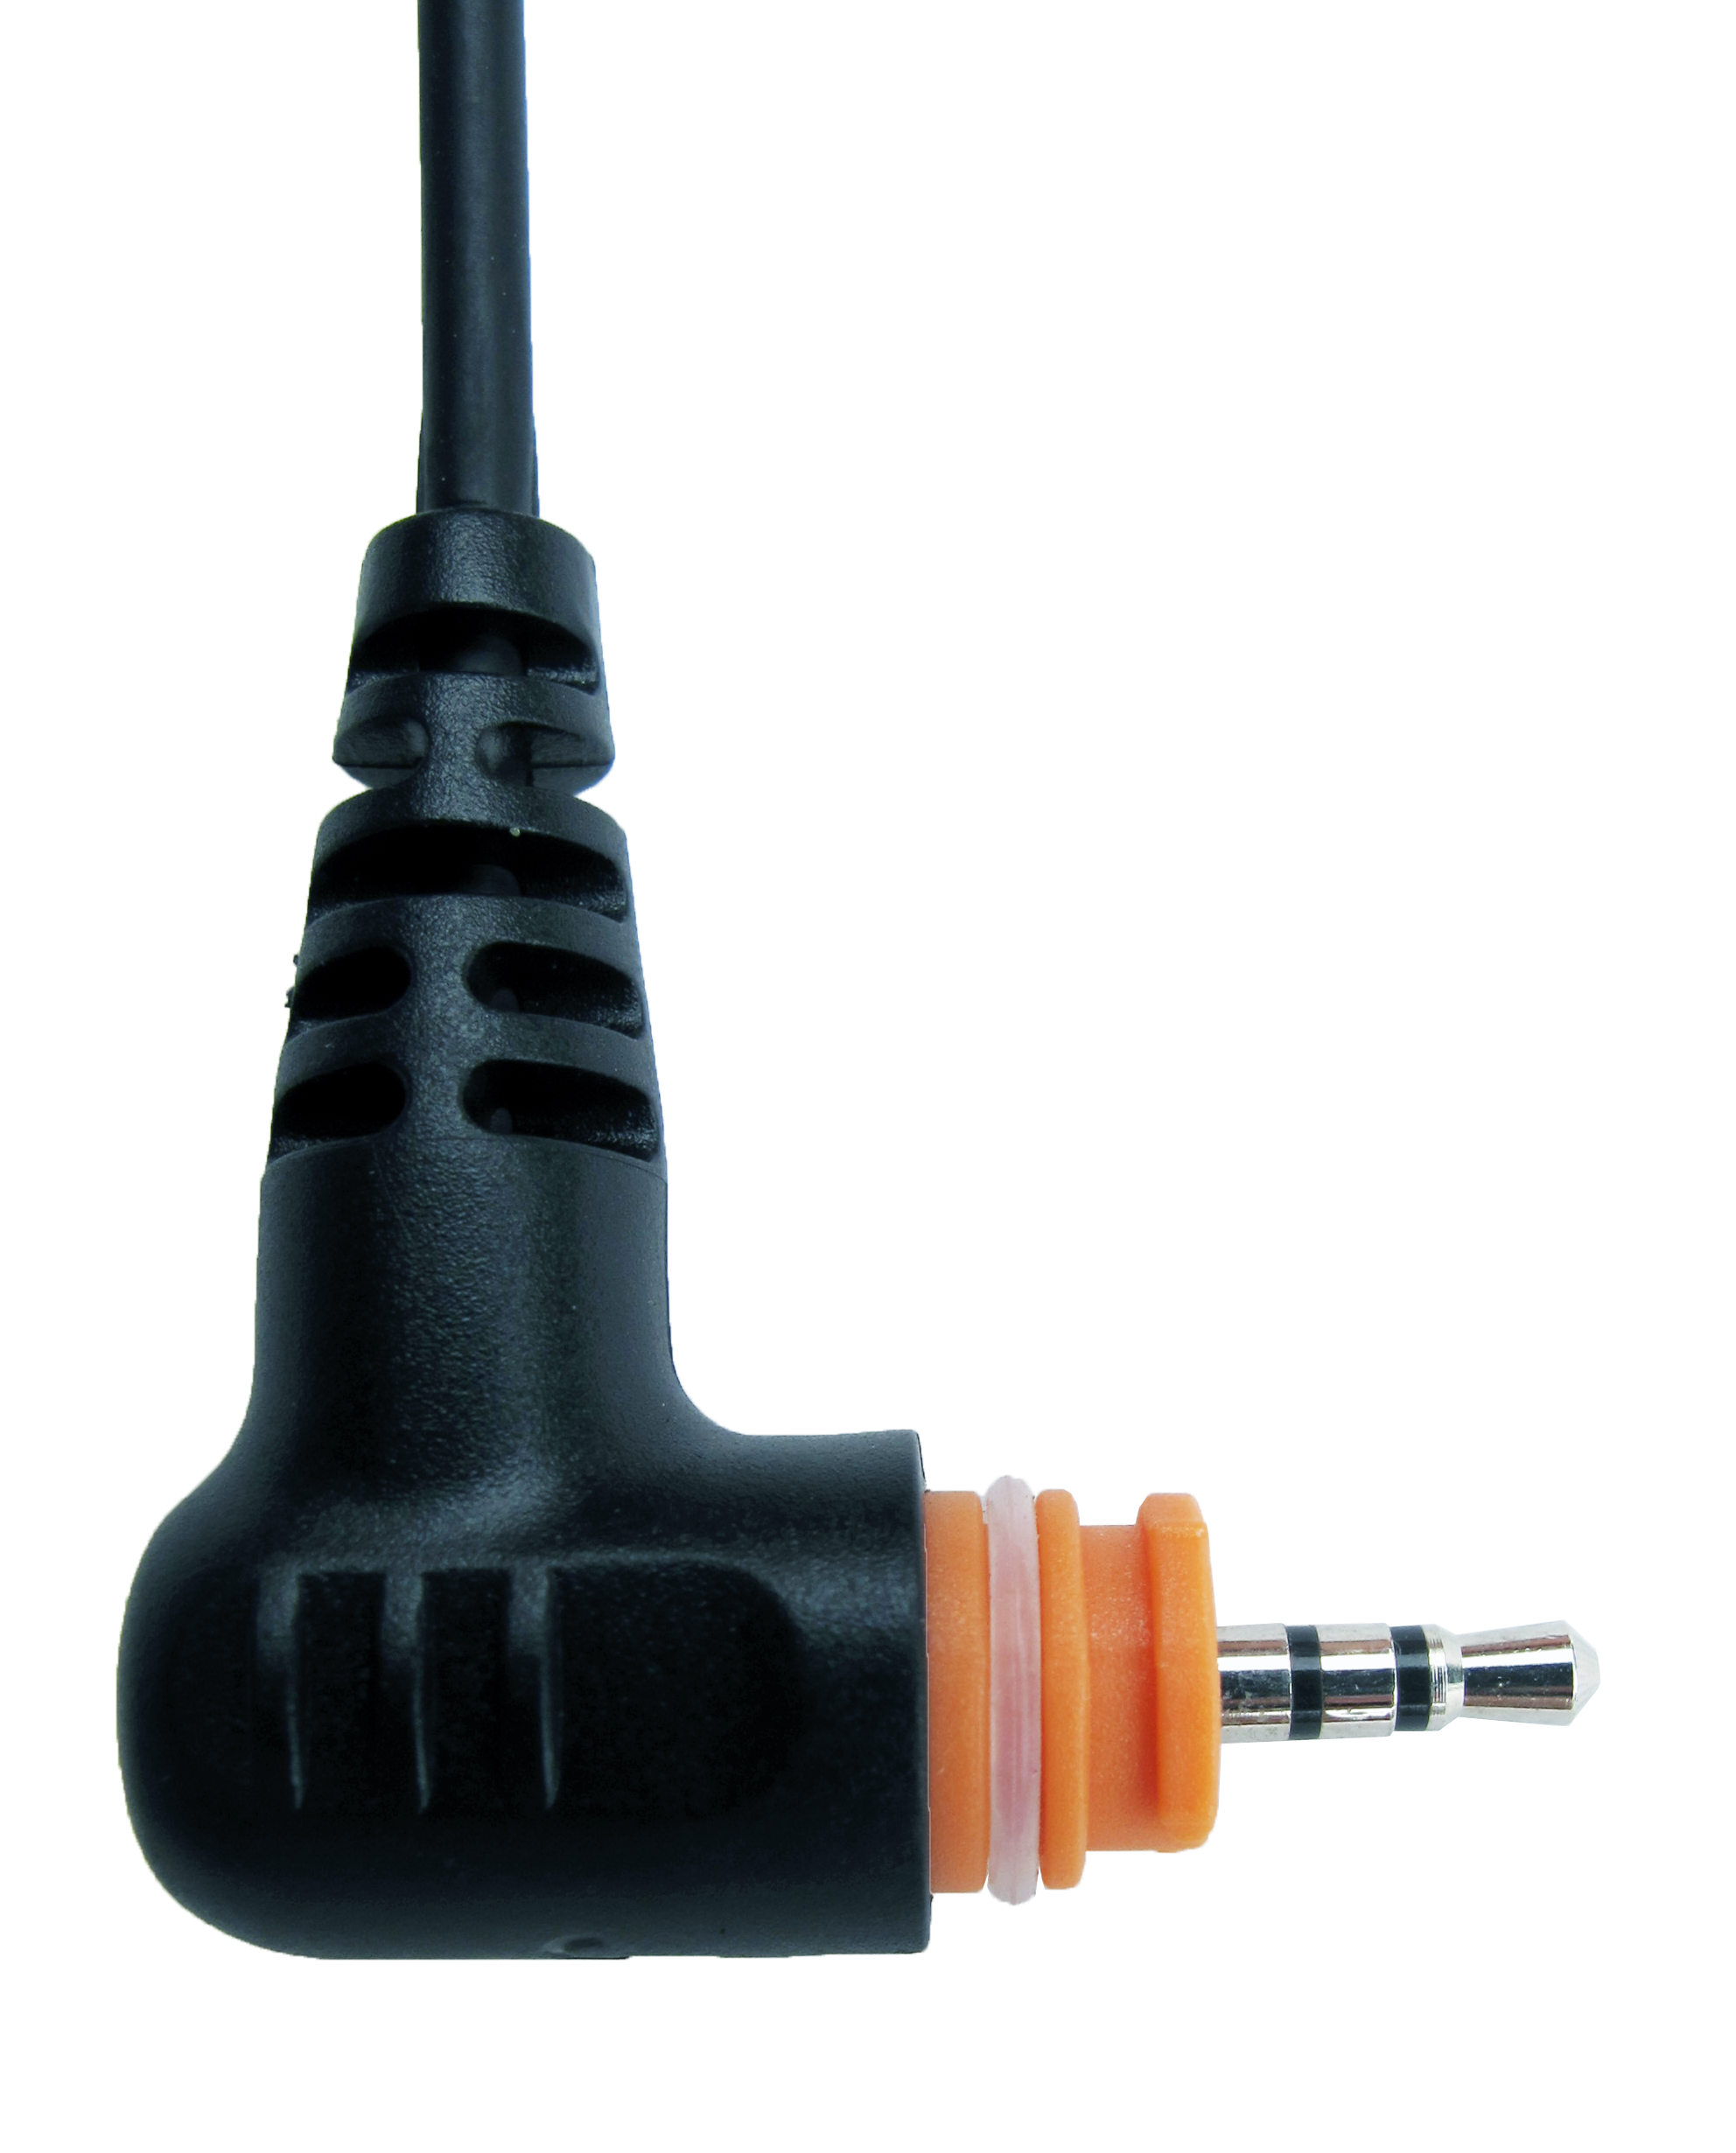 CoPacks Headset E-B40301 suitable for Motorola SL1600, SL2600, SL4000